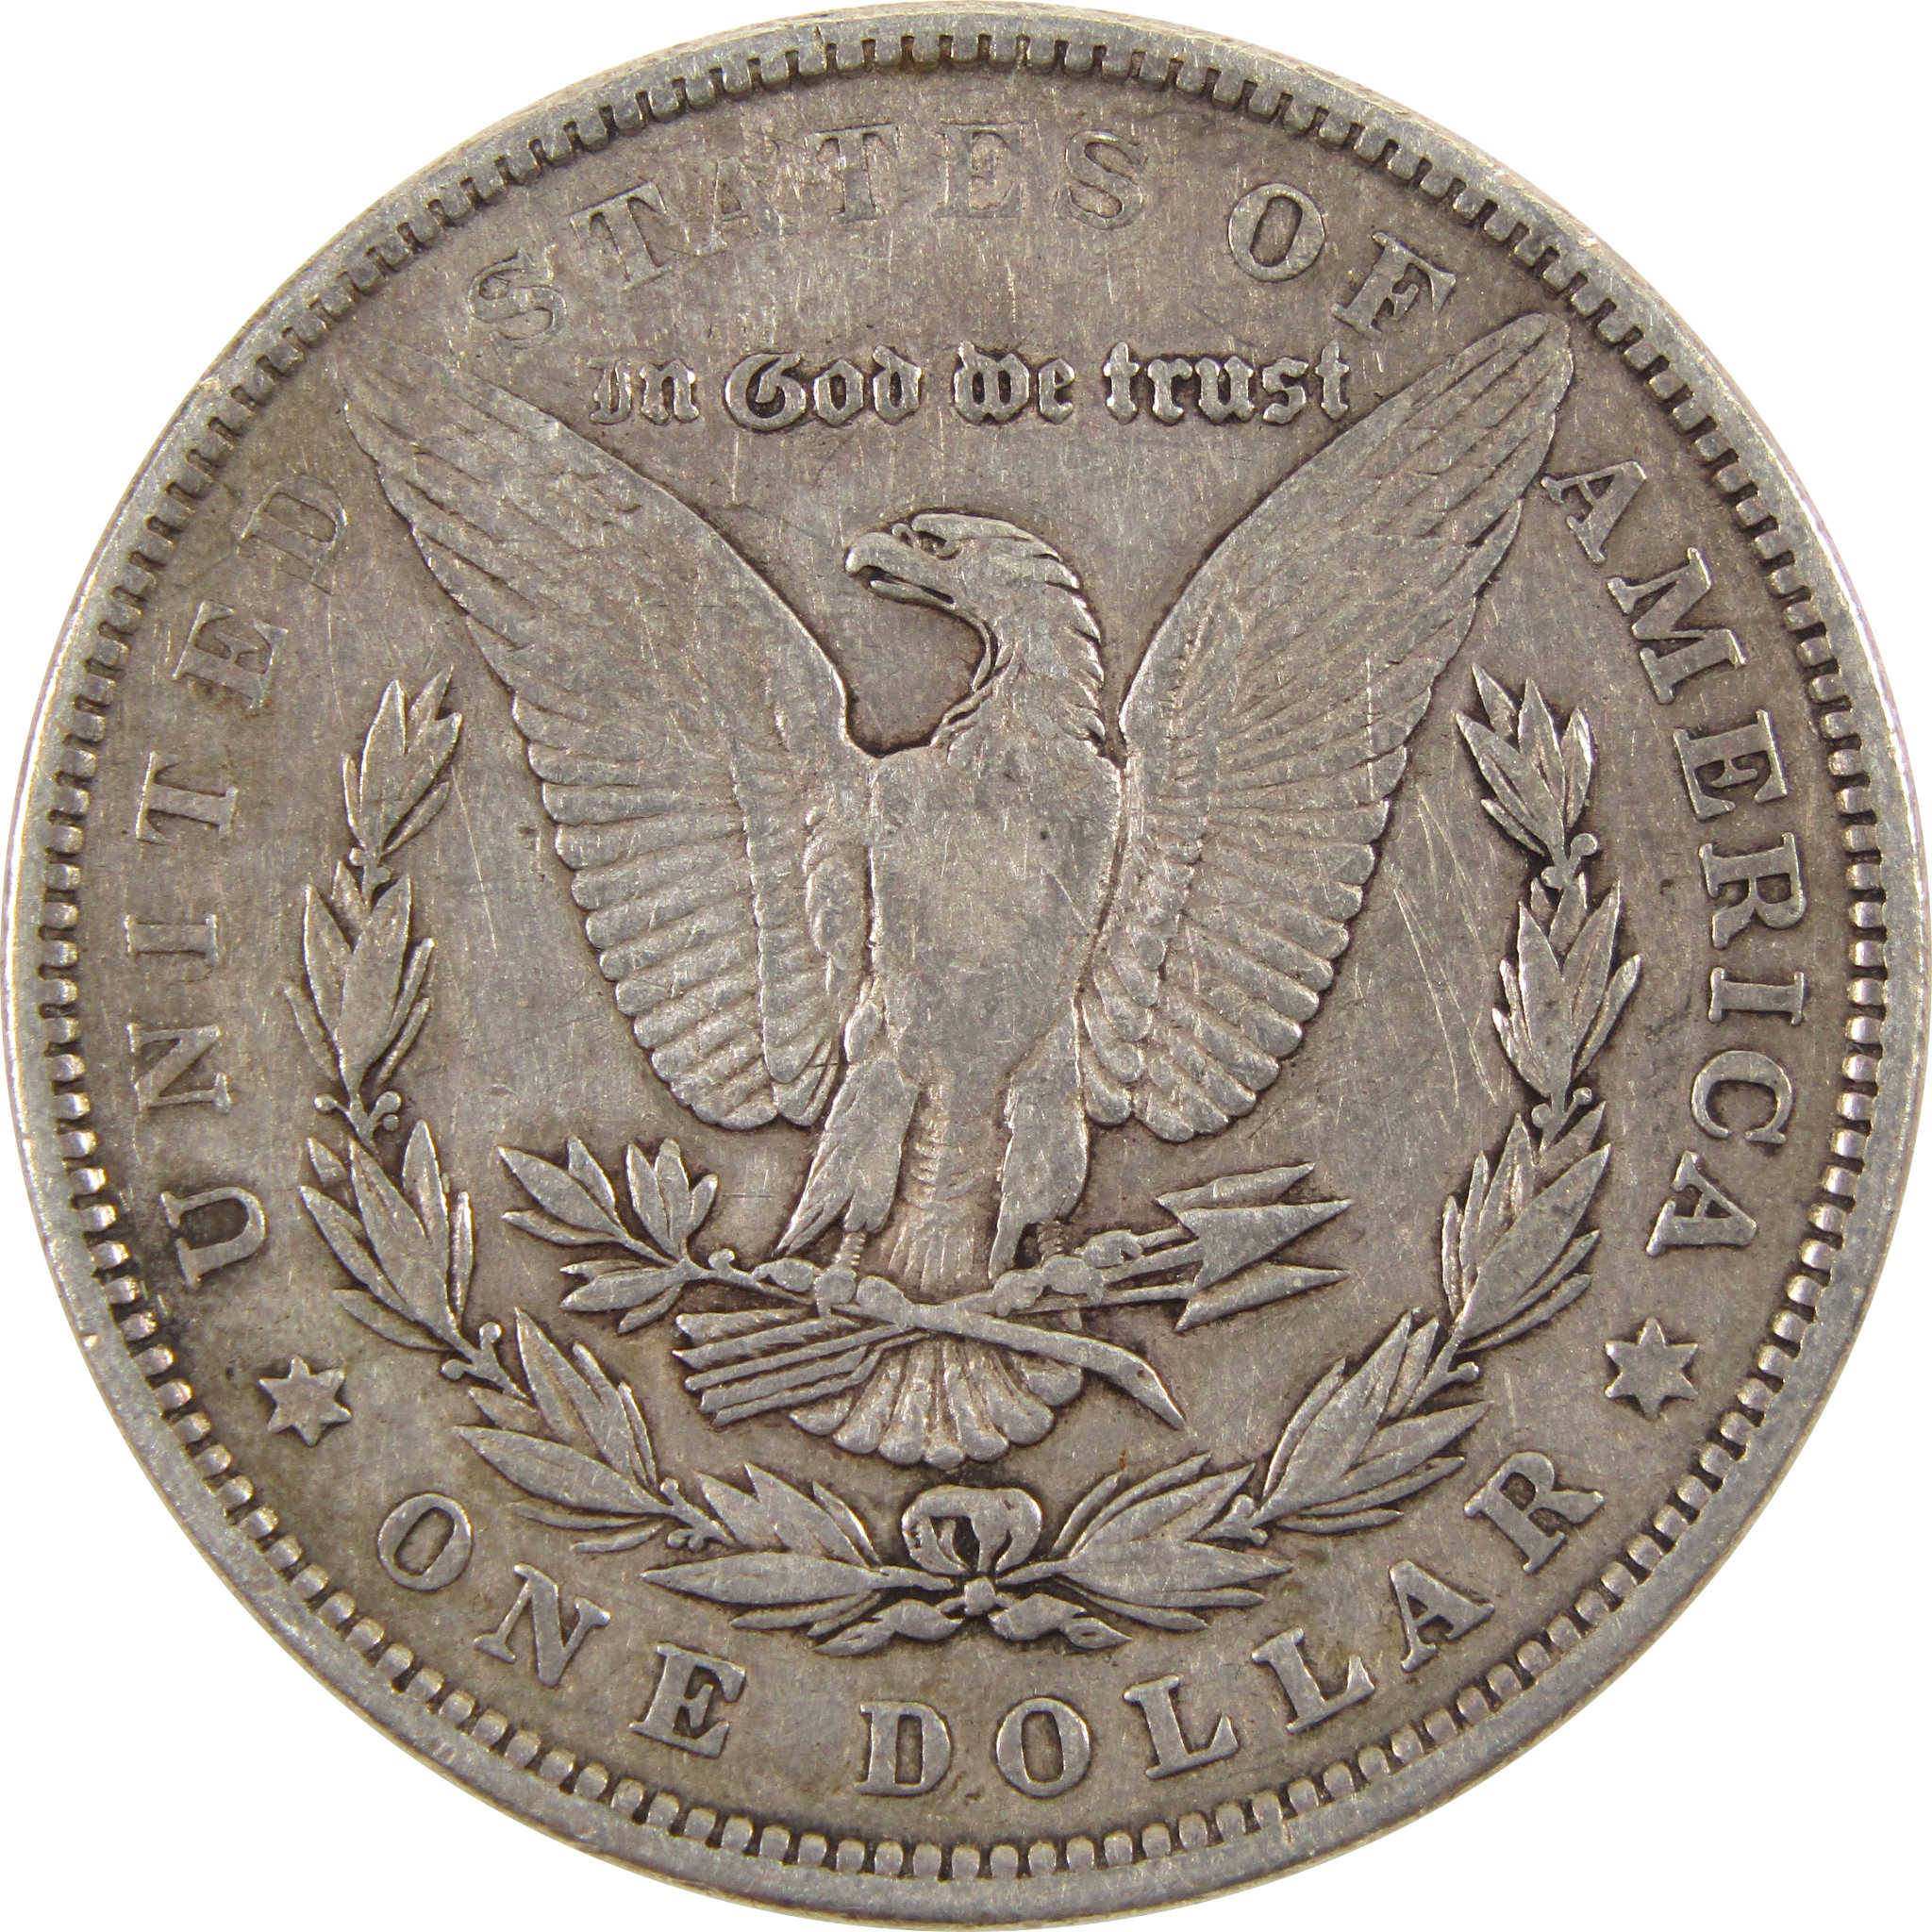 1878 7TF Rev 79 Morgan Dollar VF Very Fine Silver $1 Coin SKU:I9160 - Morgan coin - Morgan silver dollar - Morgan silver dollar for sale - Profile Coins &amp; Collectibles